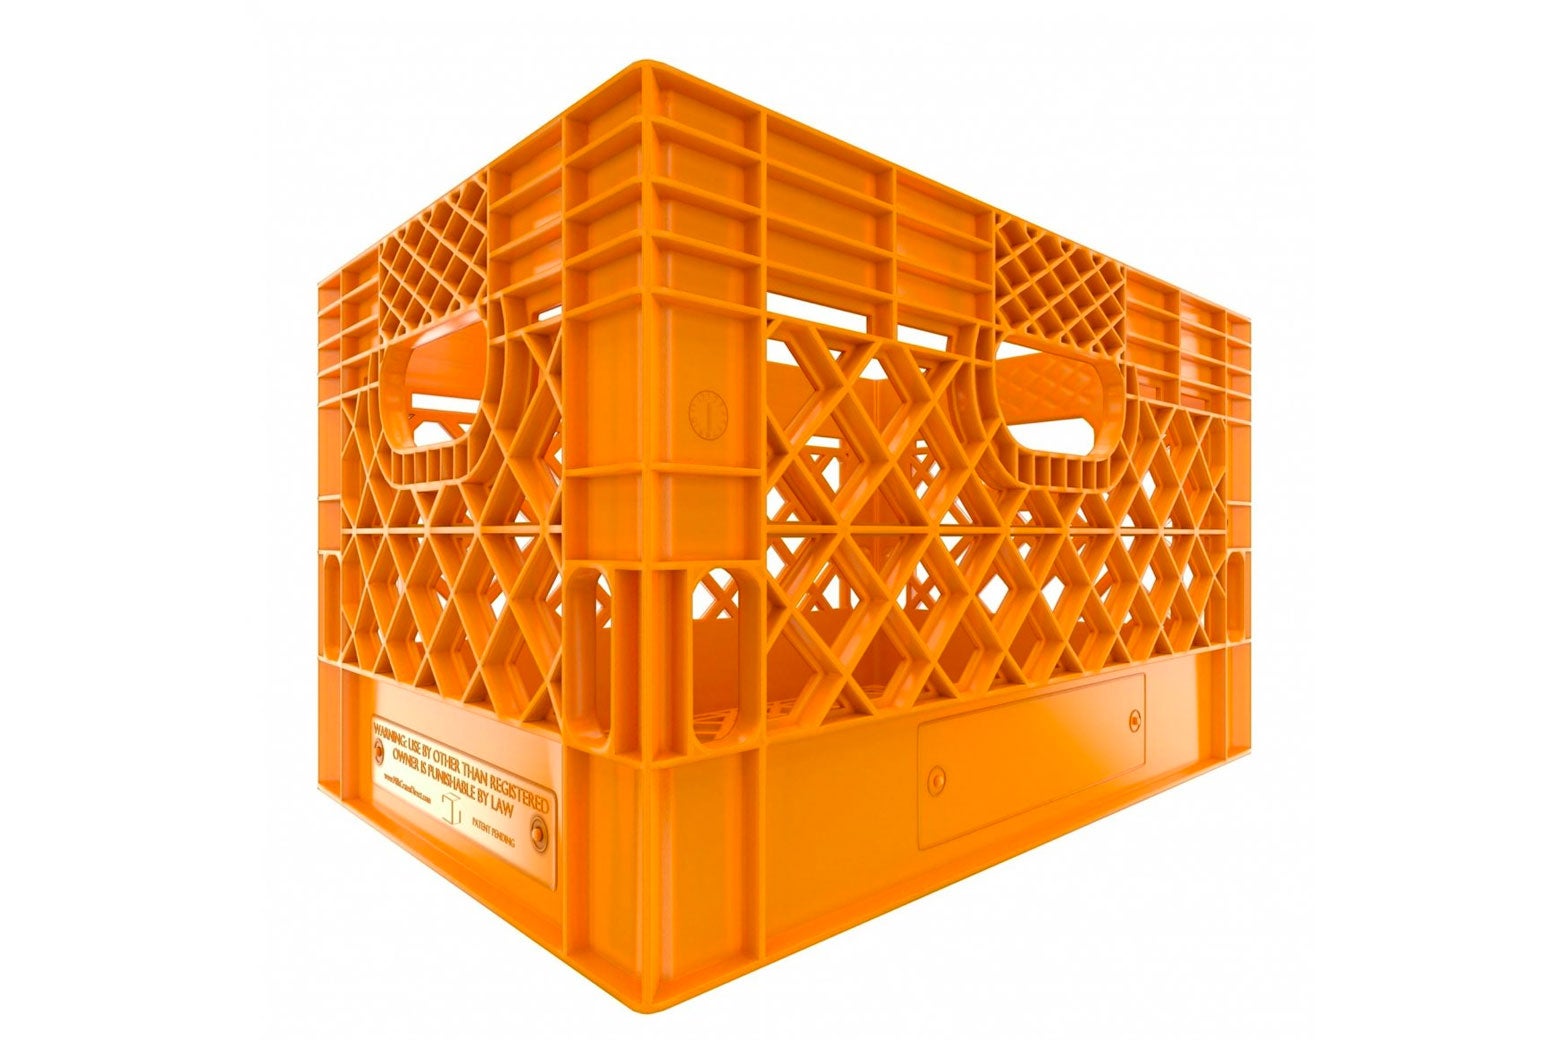 An empty orange milk crate.